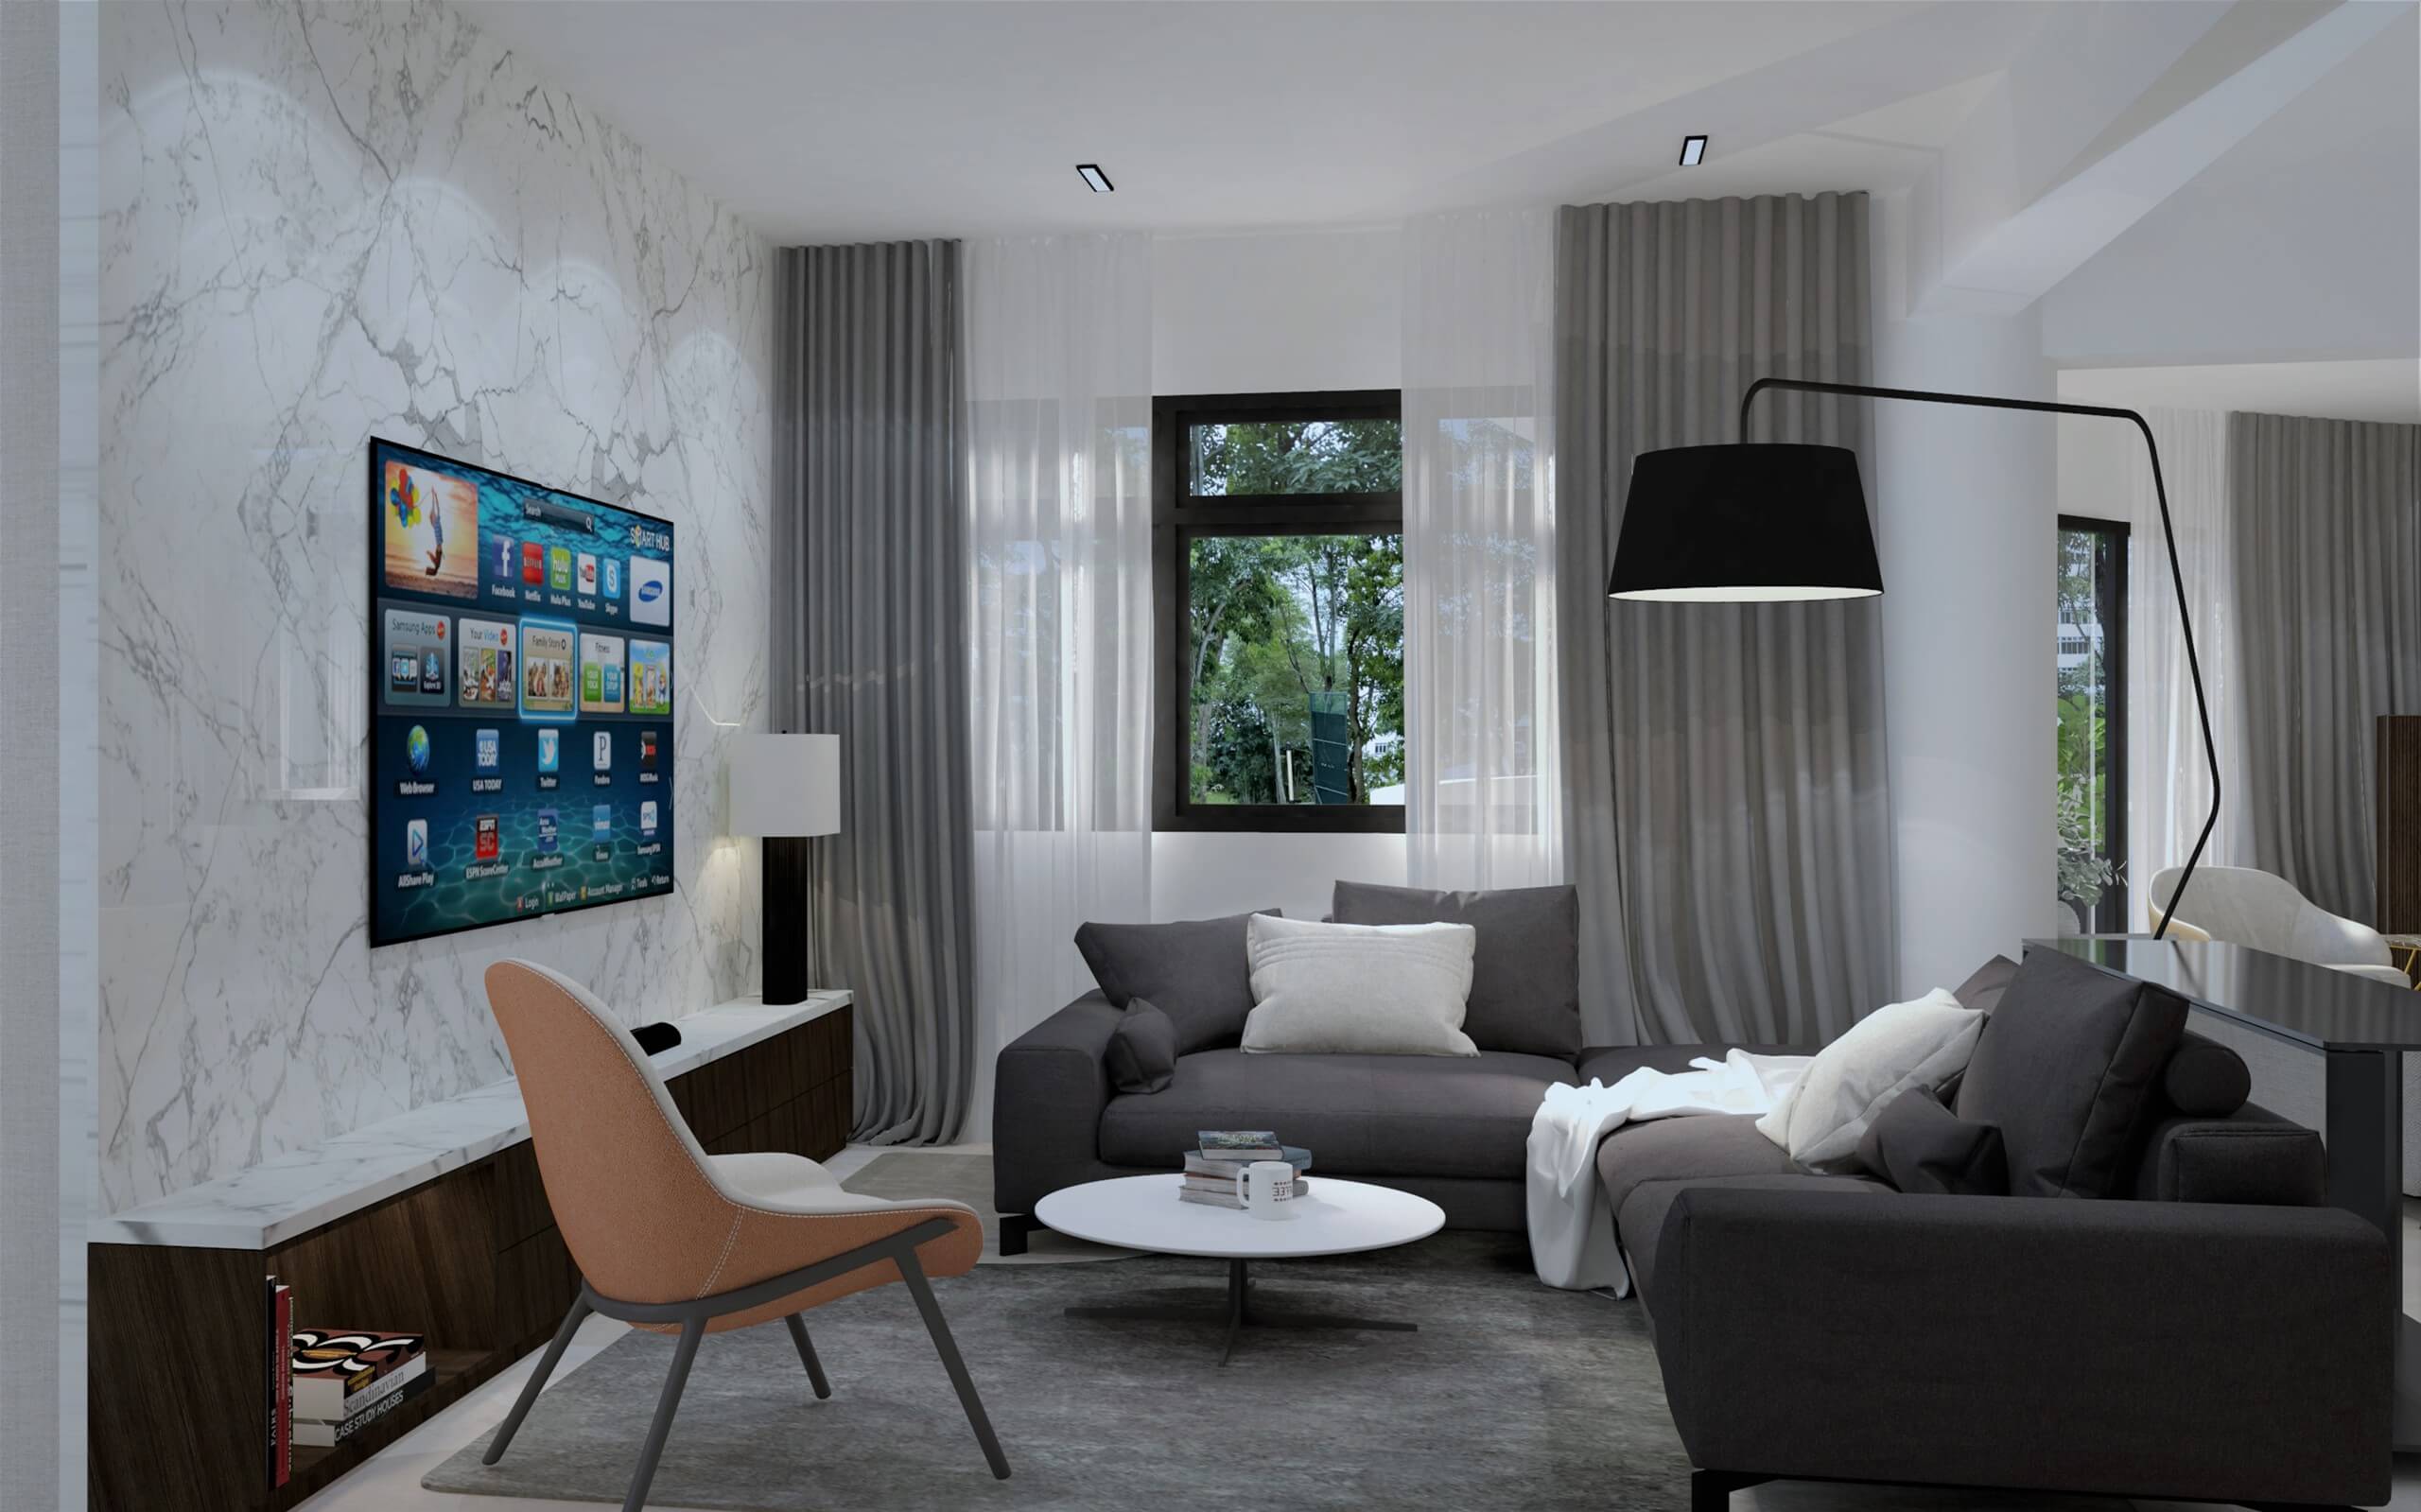 Interior Design of a living room in Singapore